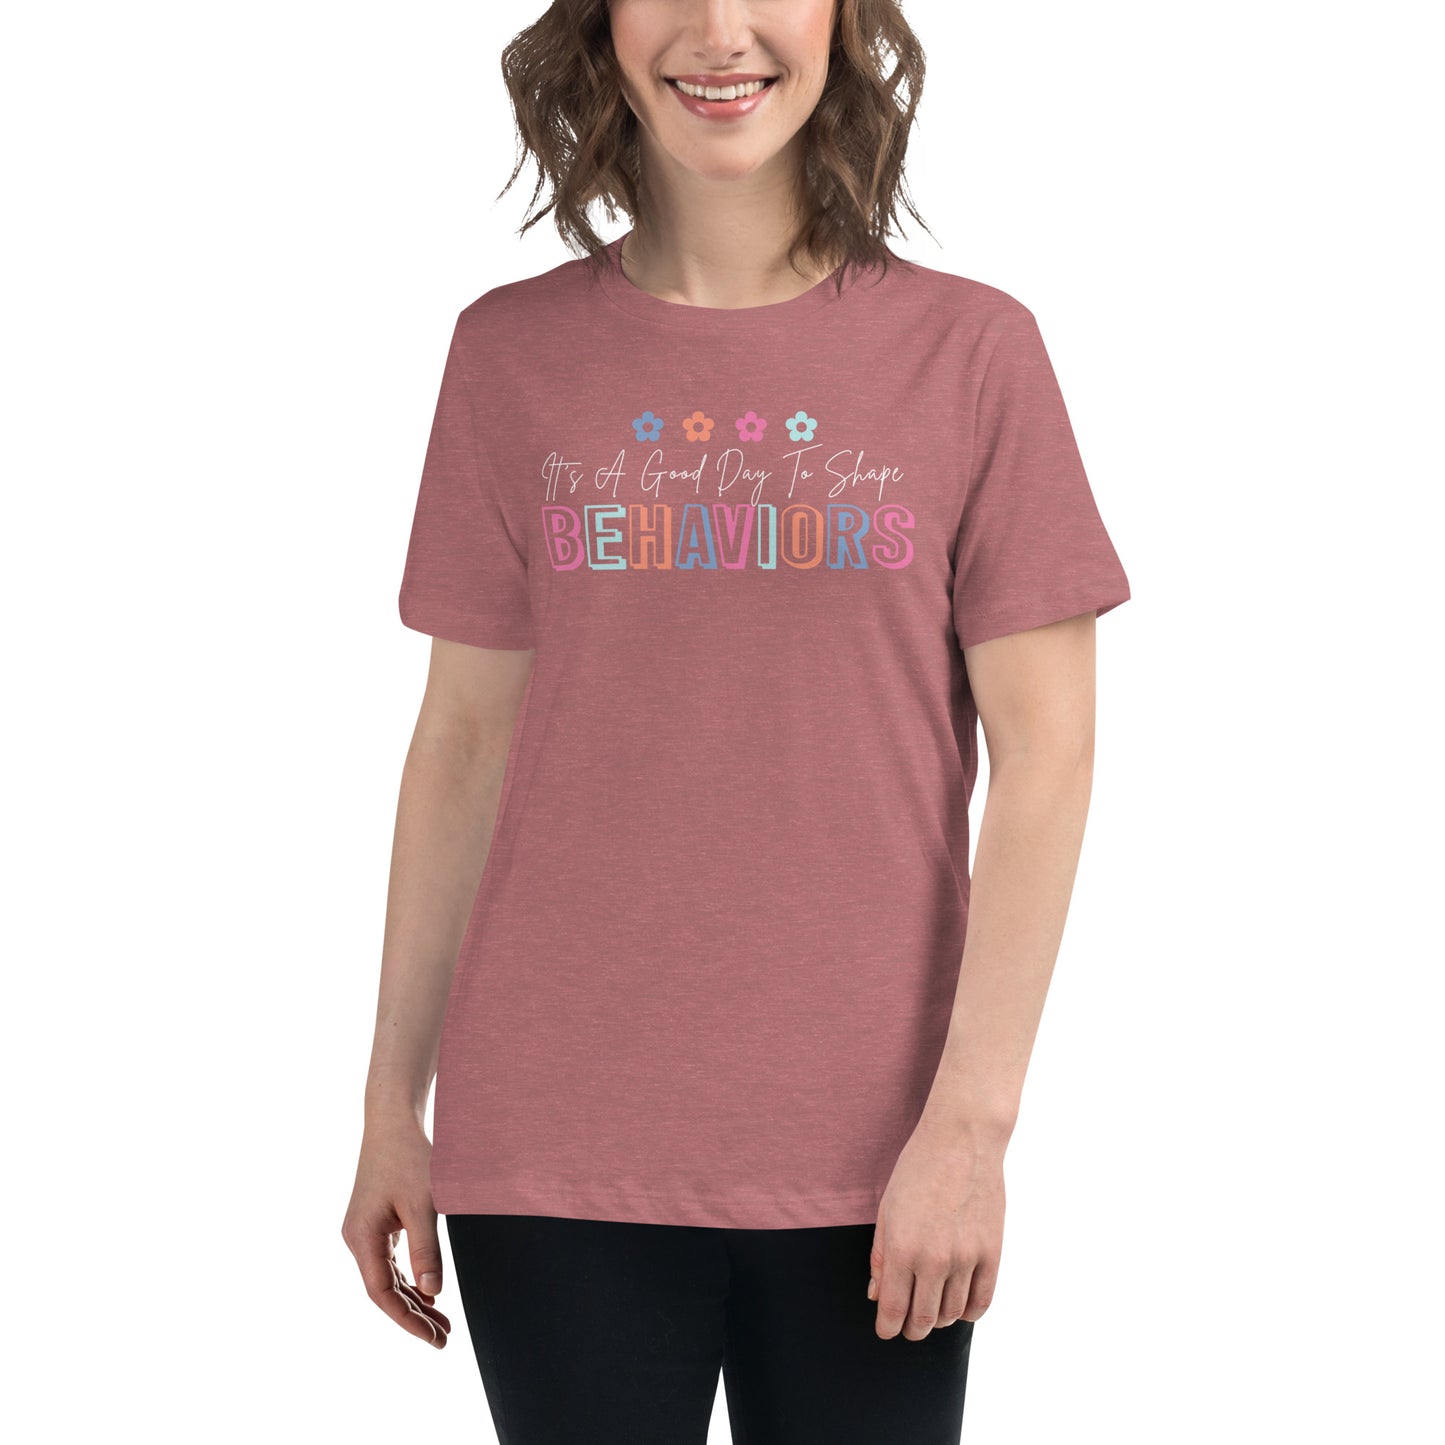 It’s a Good Day to Shape Behaviors - Women’s T-shirt